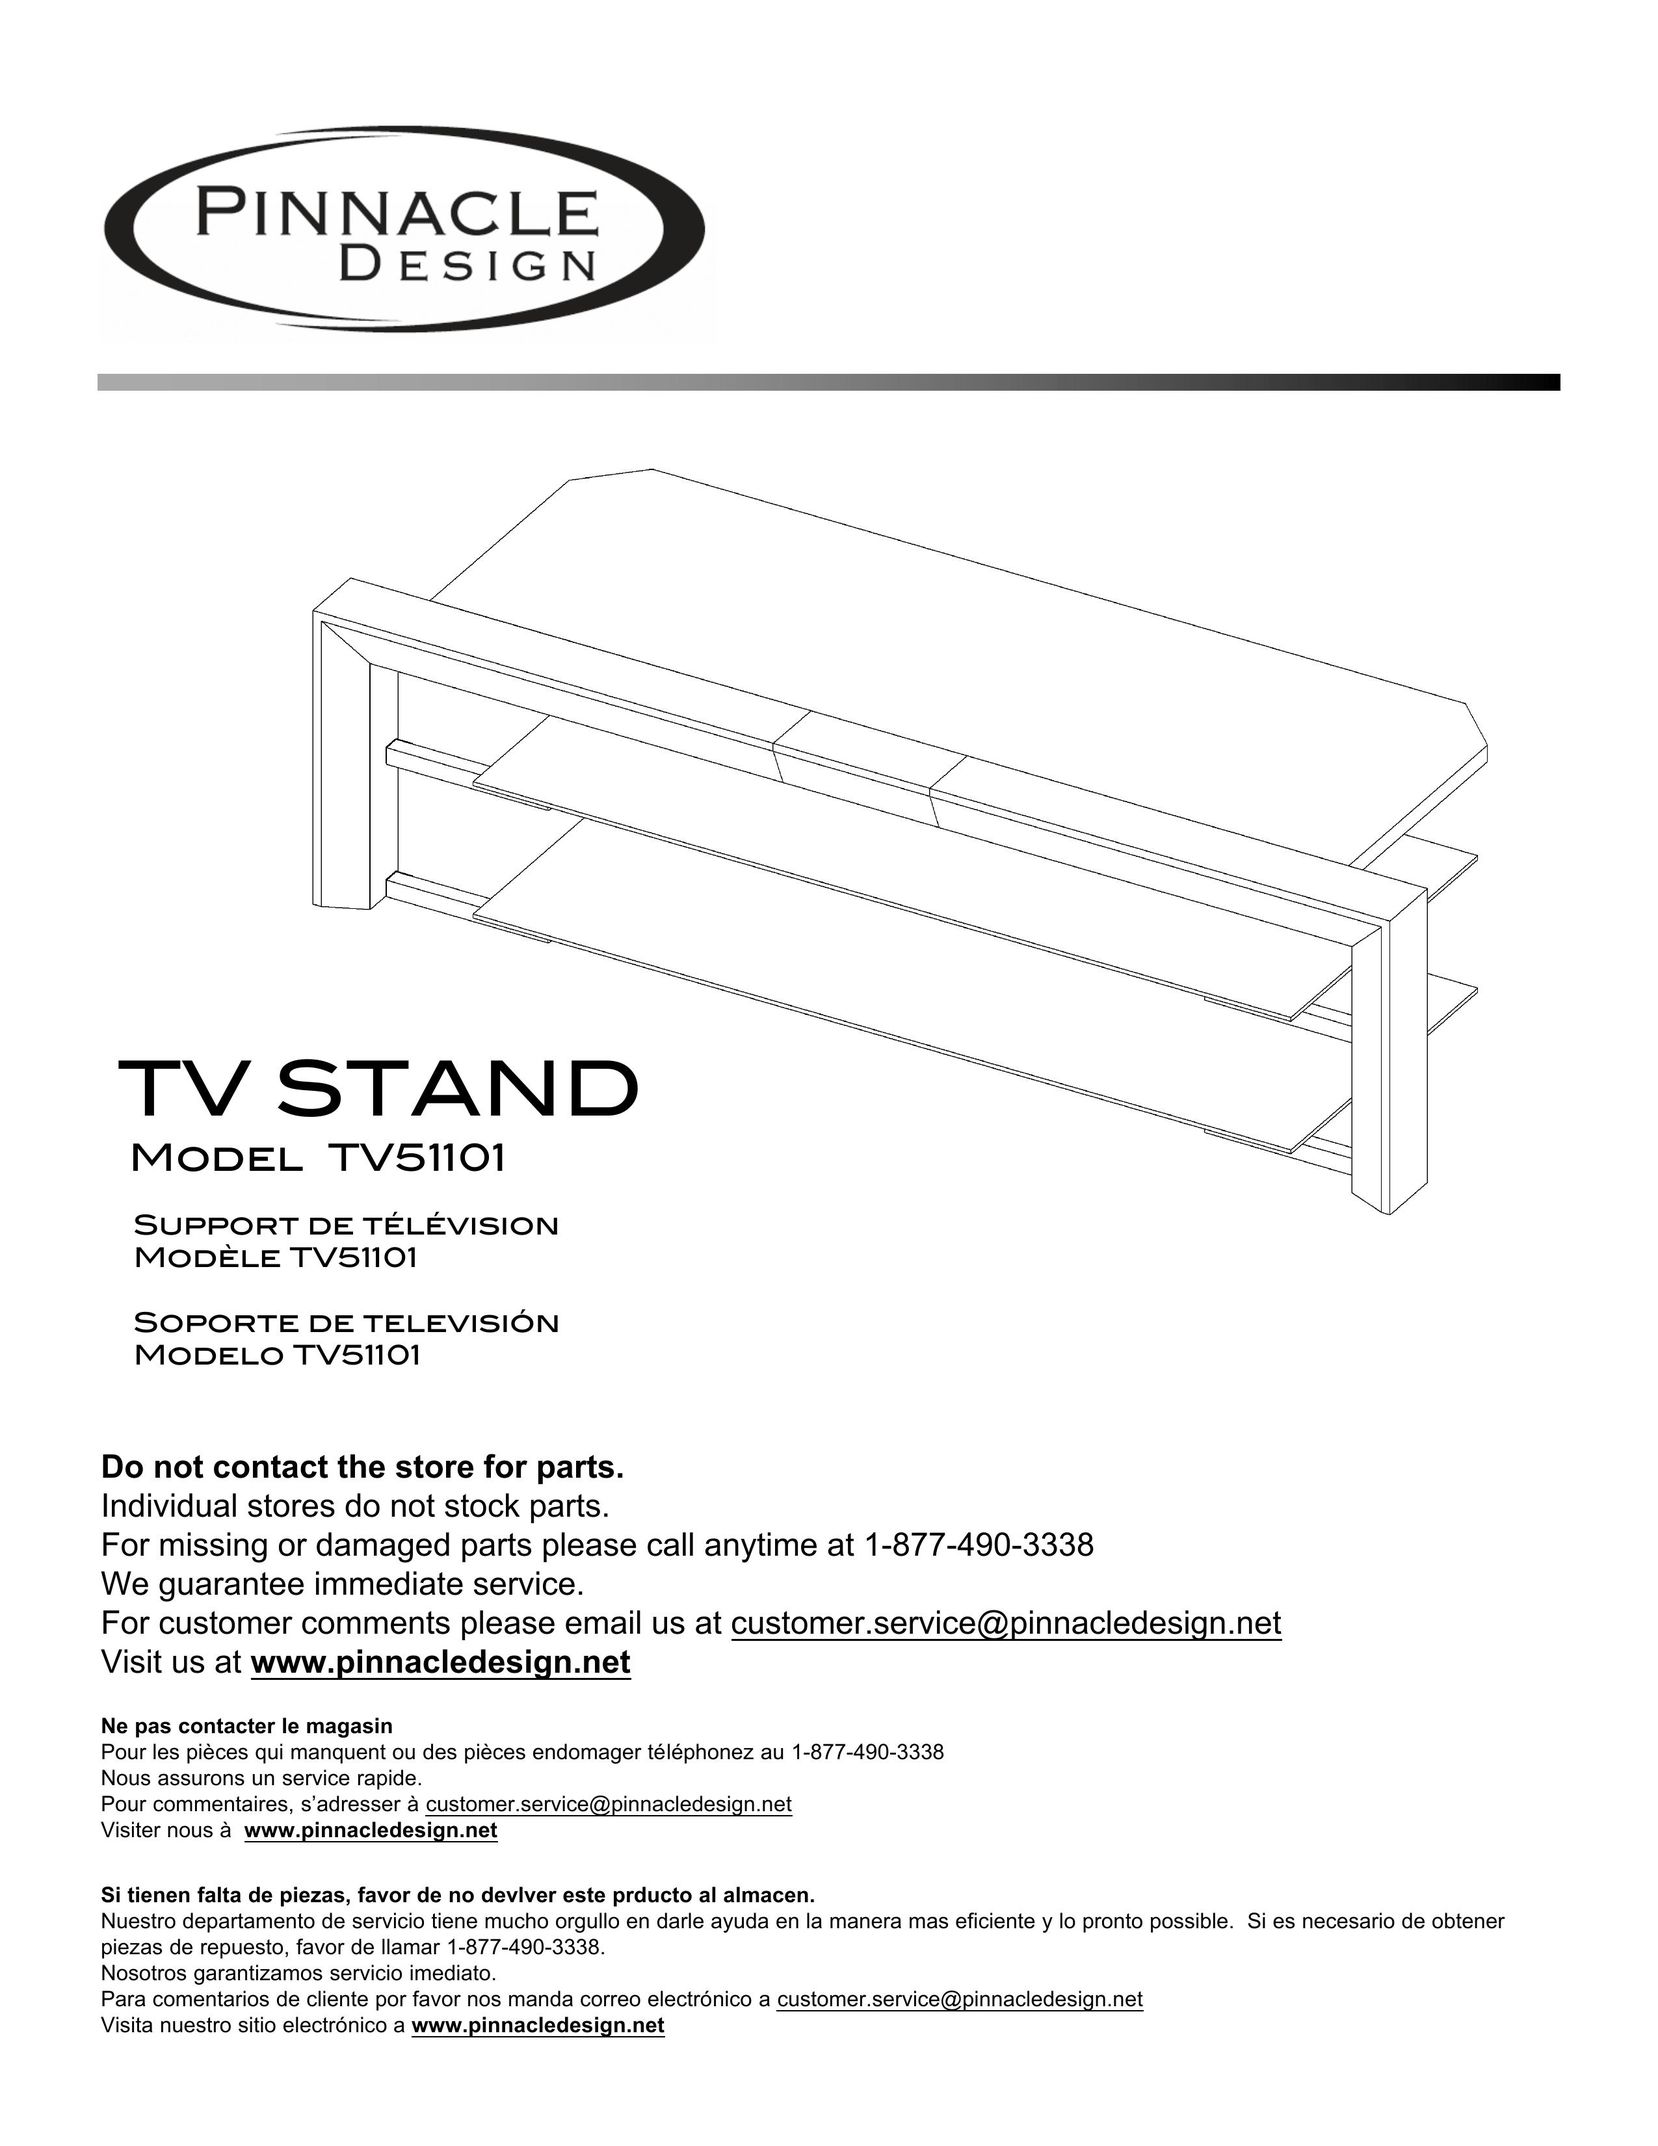 Pinnacle Design TV51101 TV Video Accessories User Manual